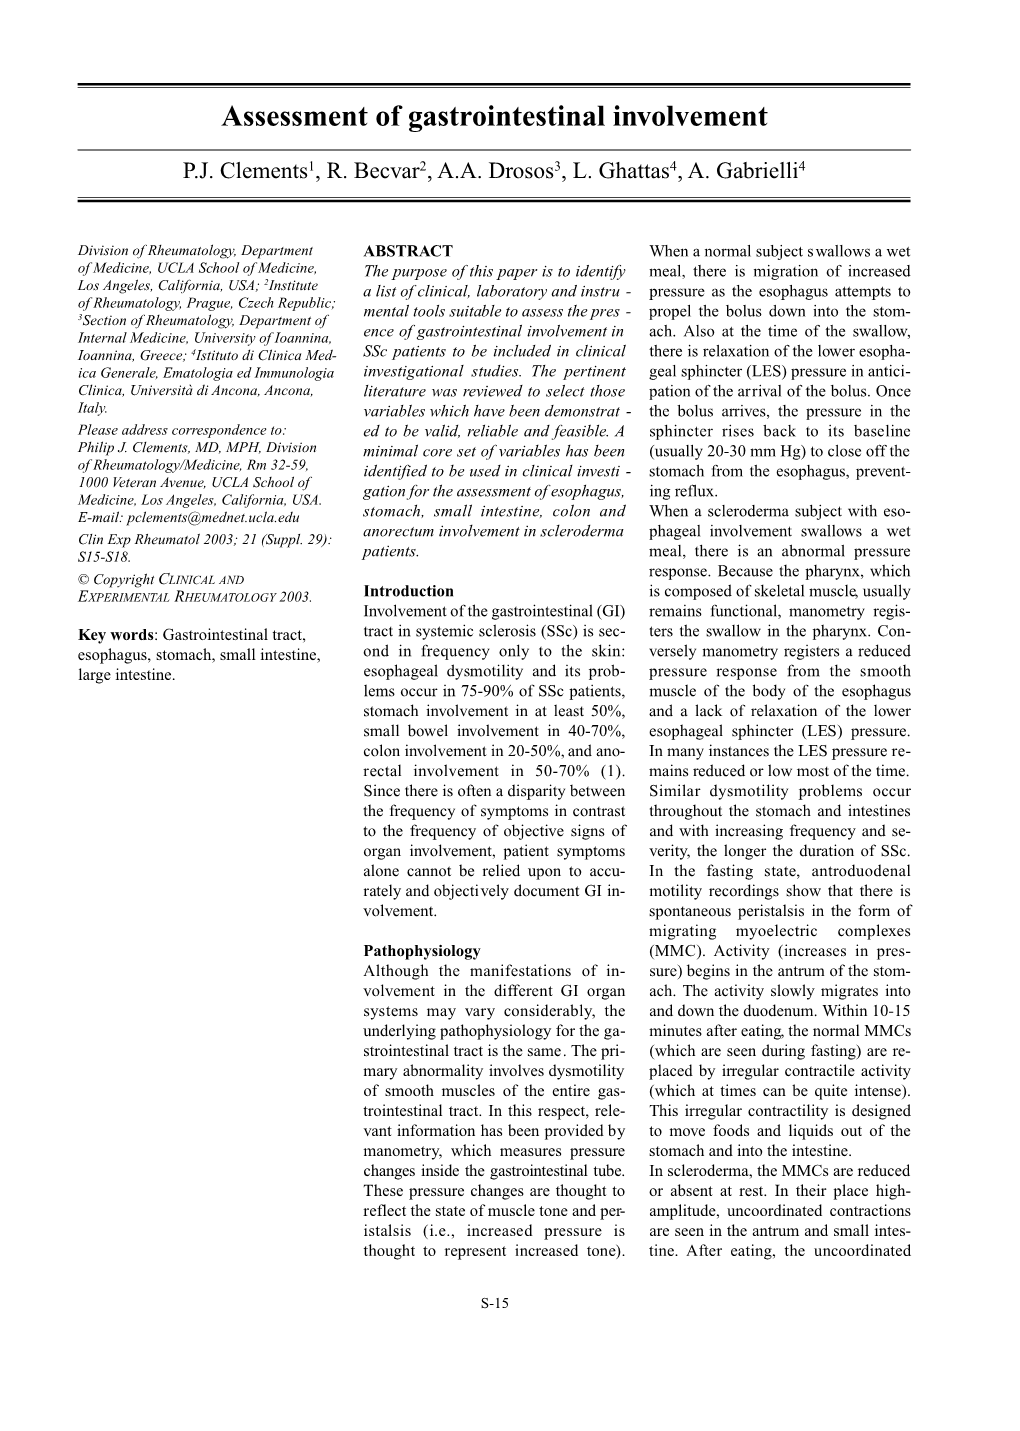 Assessment of Gastrointestinal Involvement